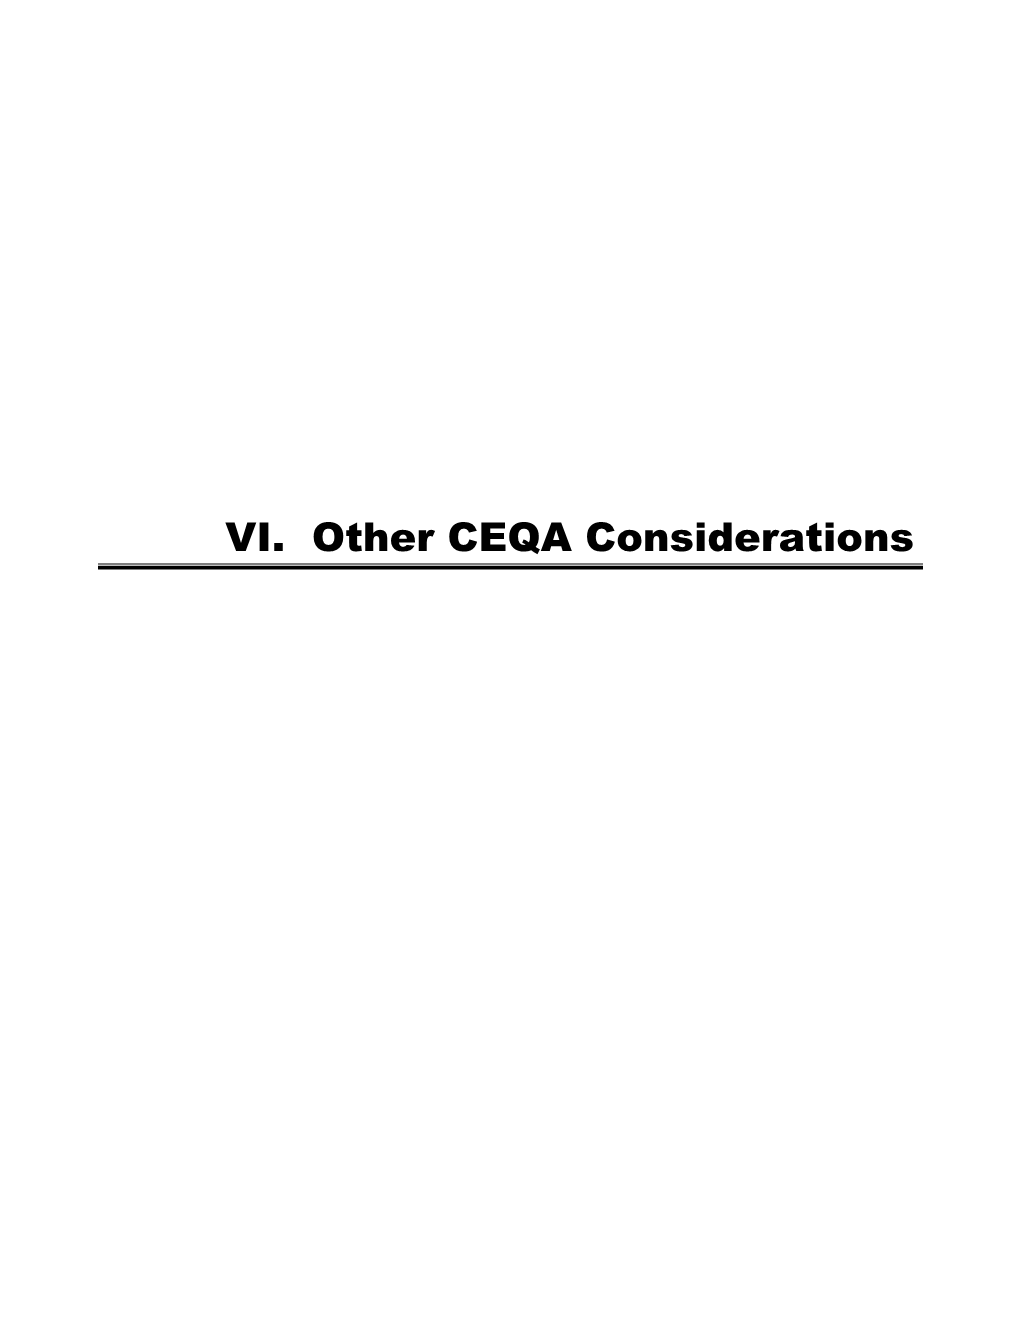 VI. Other CEQA Considerations VI